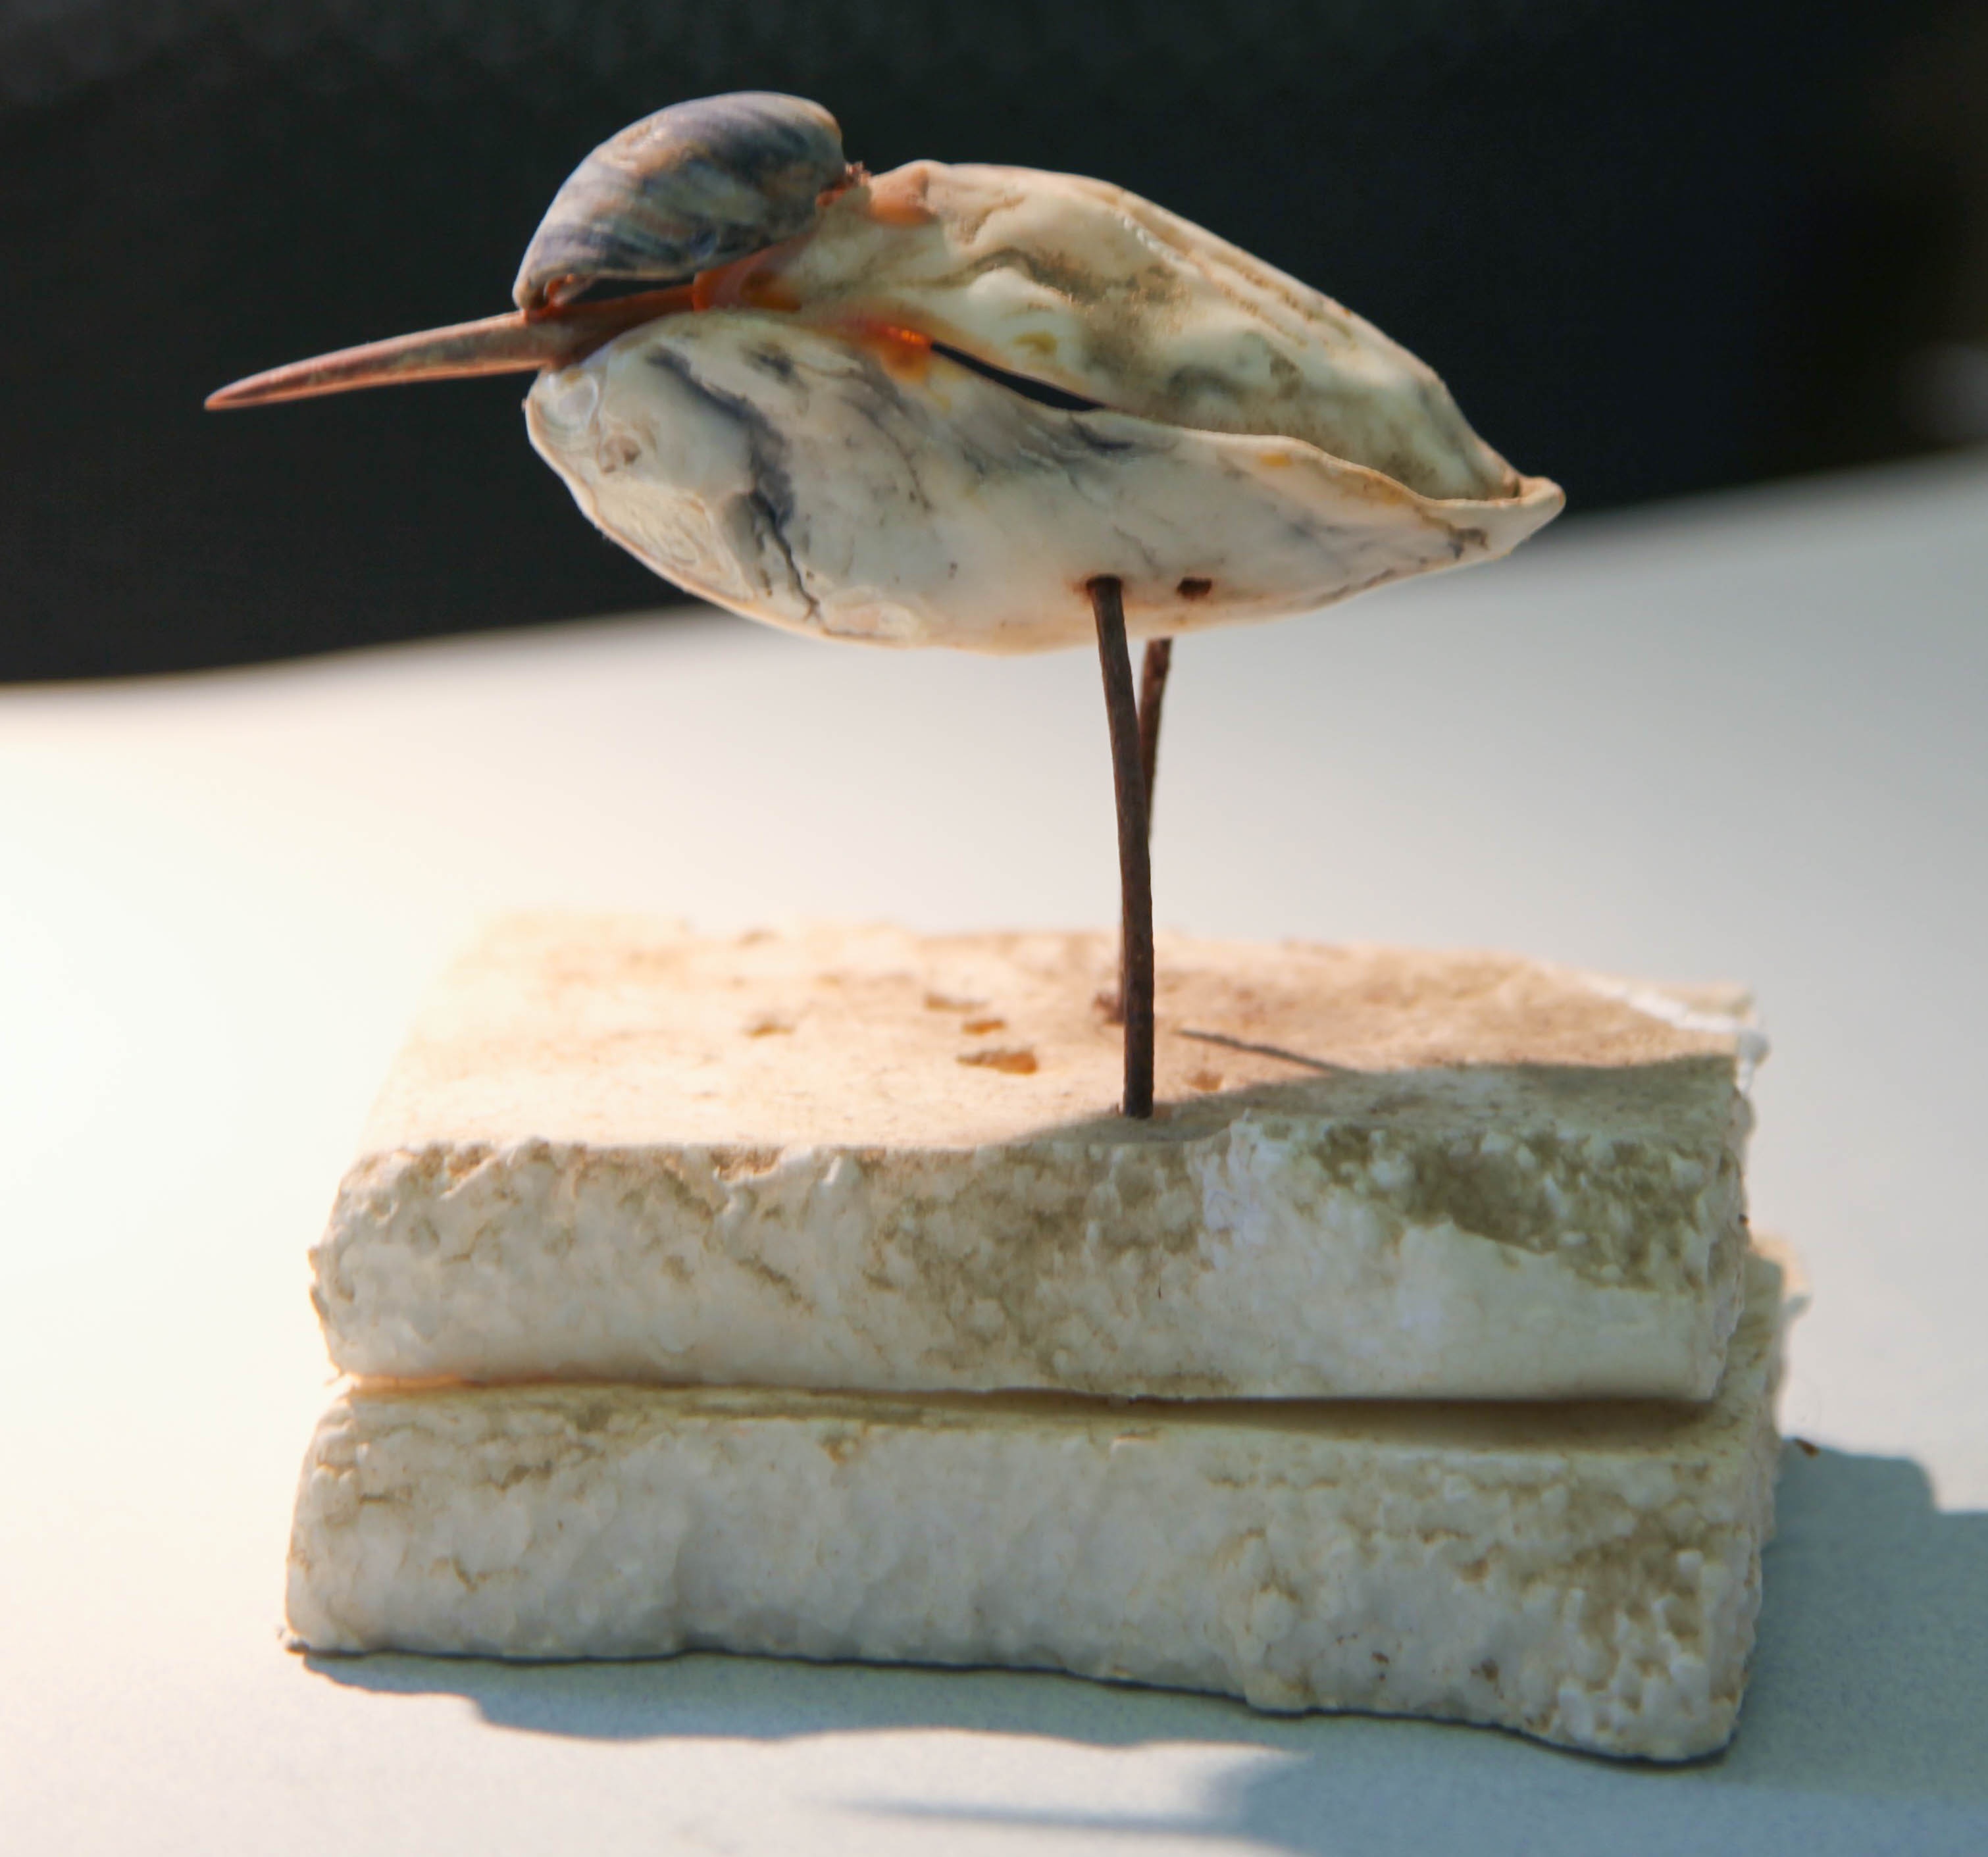 Bird sculpture created from seashells